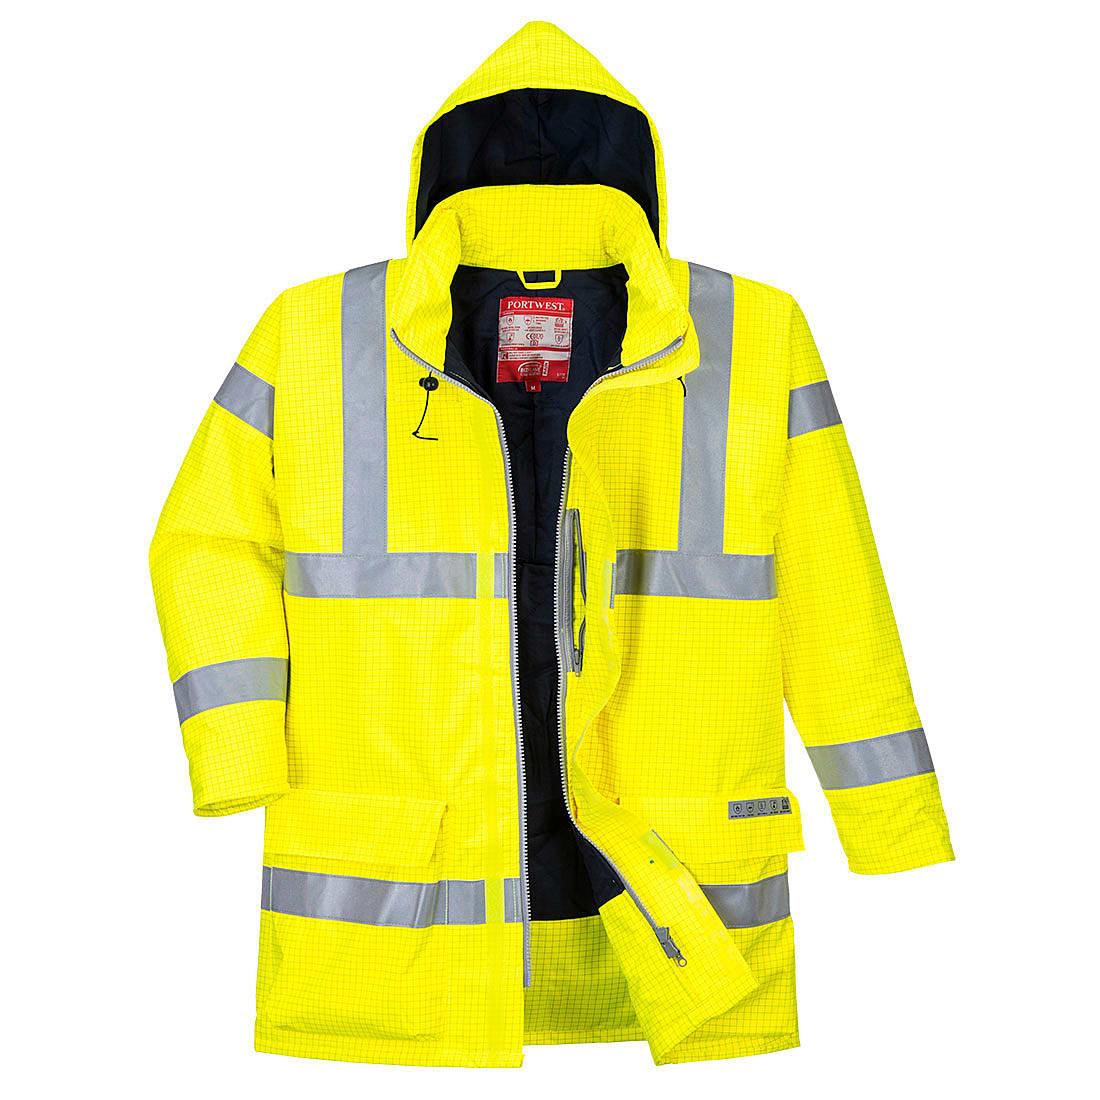 Portwest Bizflame Rain Hi-Viz Antistatic FR Jacket in Yellow (Product Code: S778)